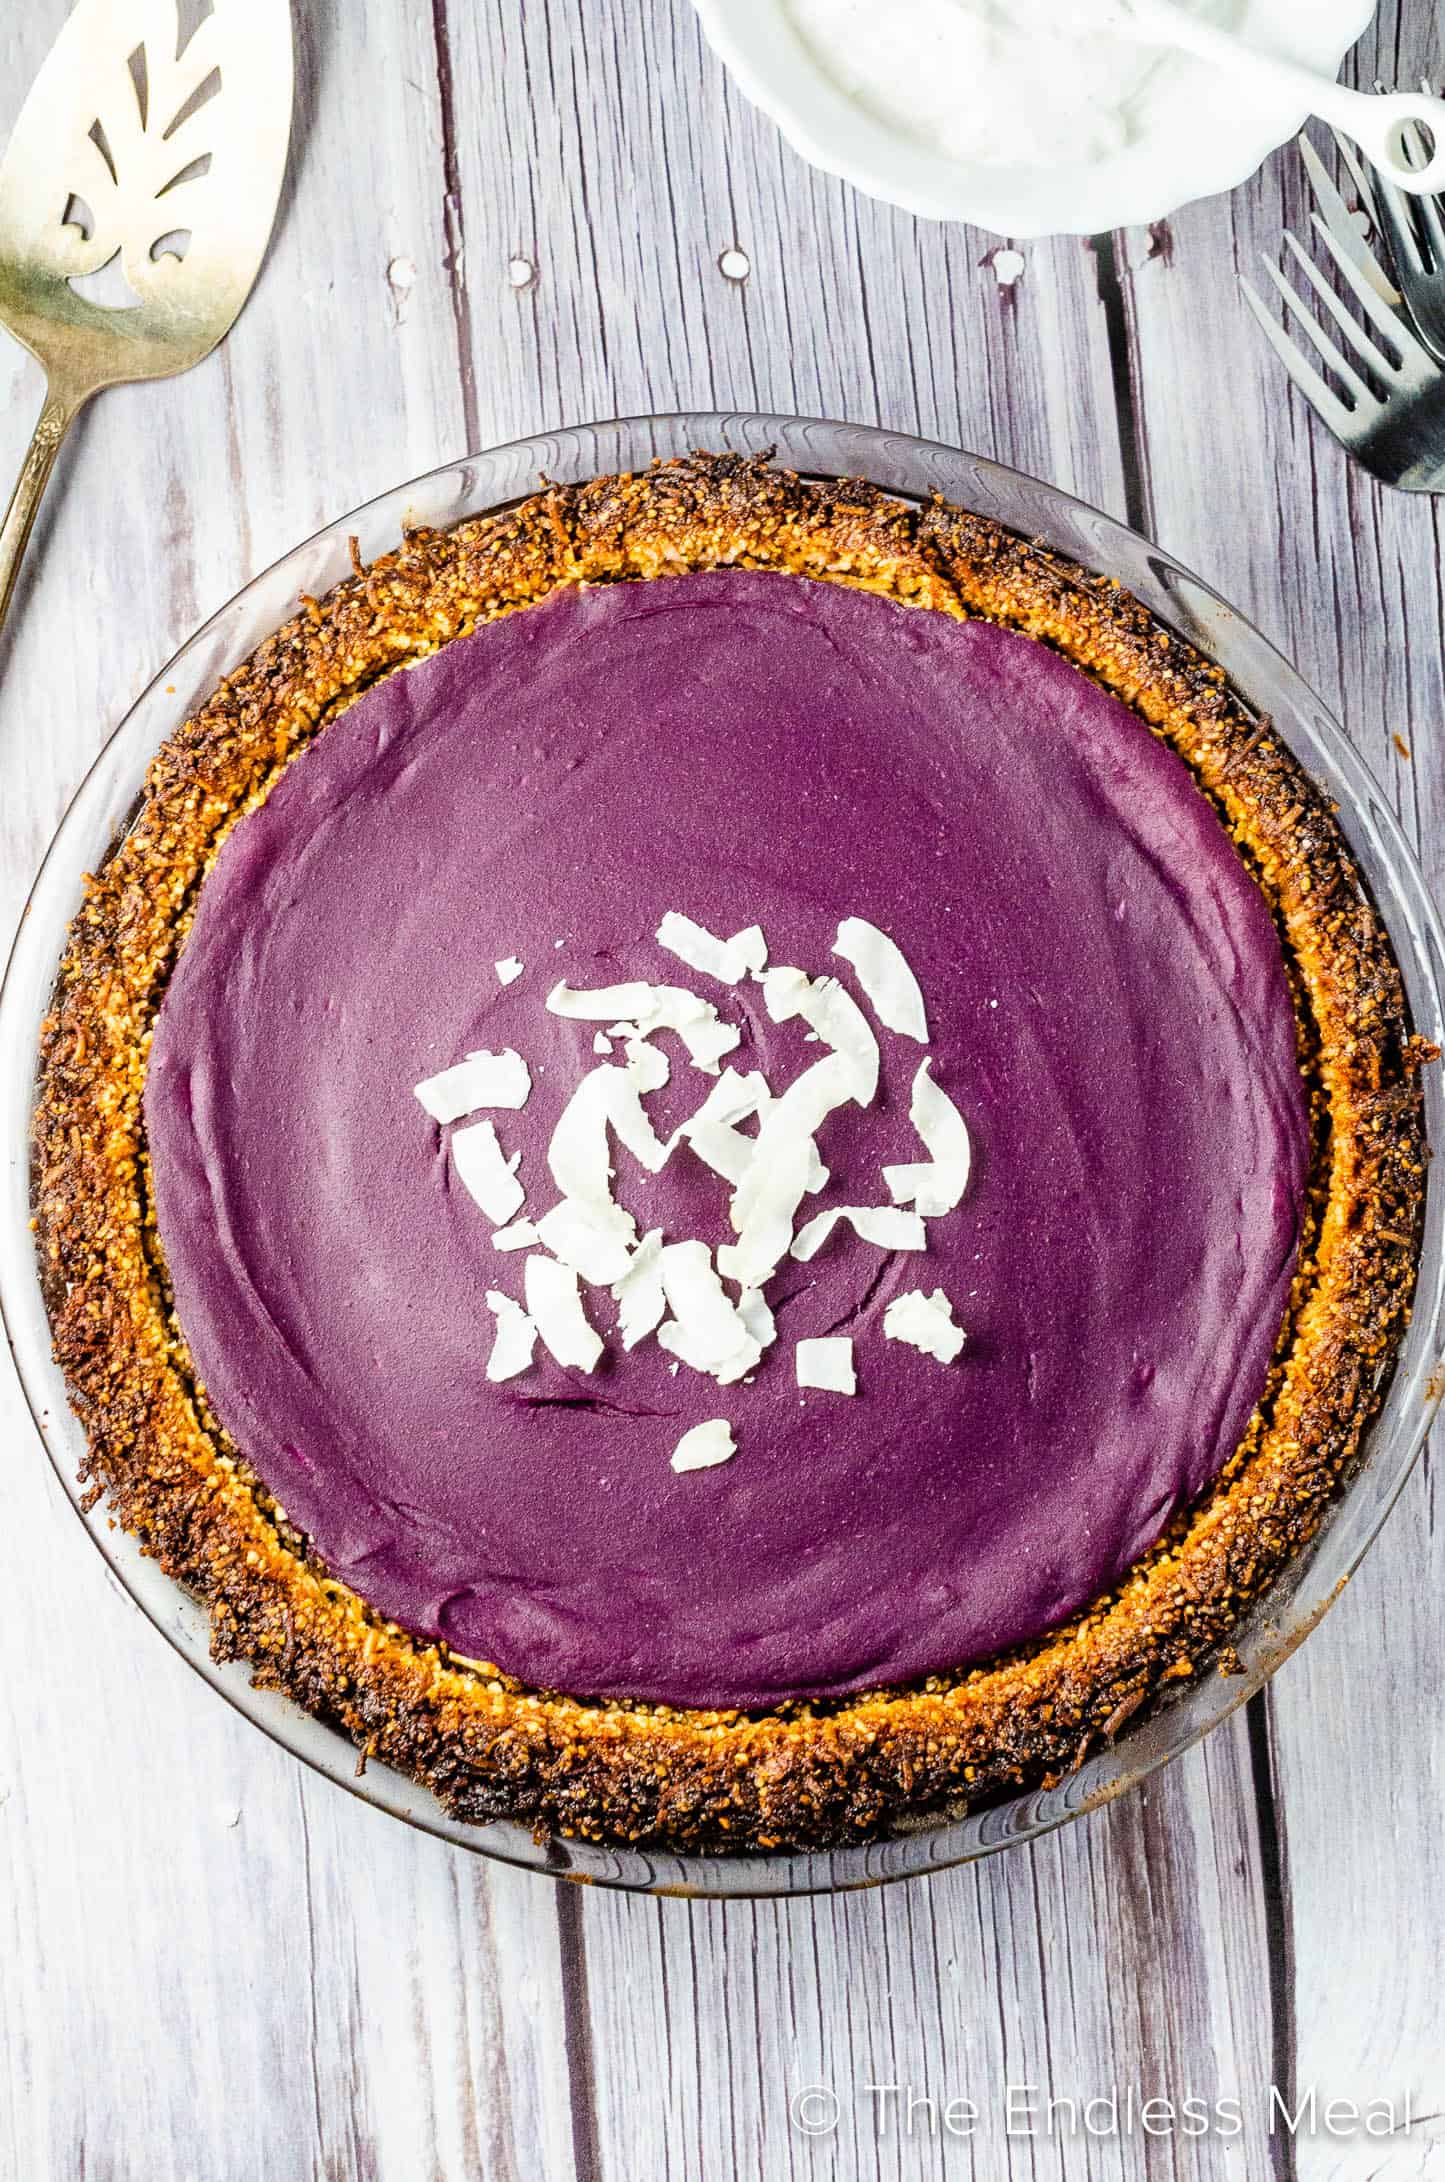 Vegan Purple Sweet Potato Pie with coconut sprinkled on top